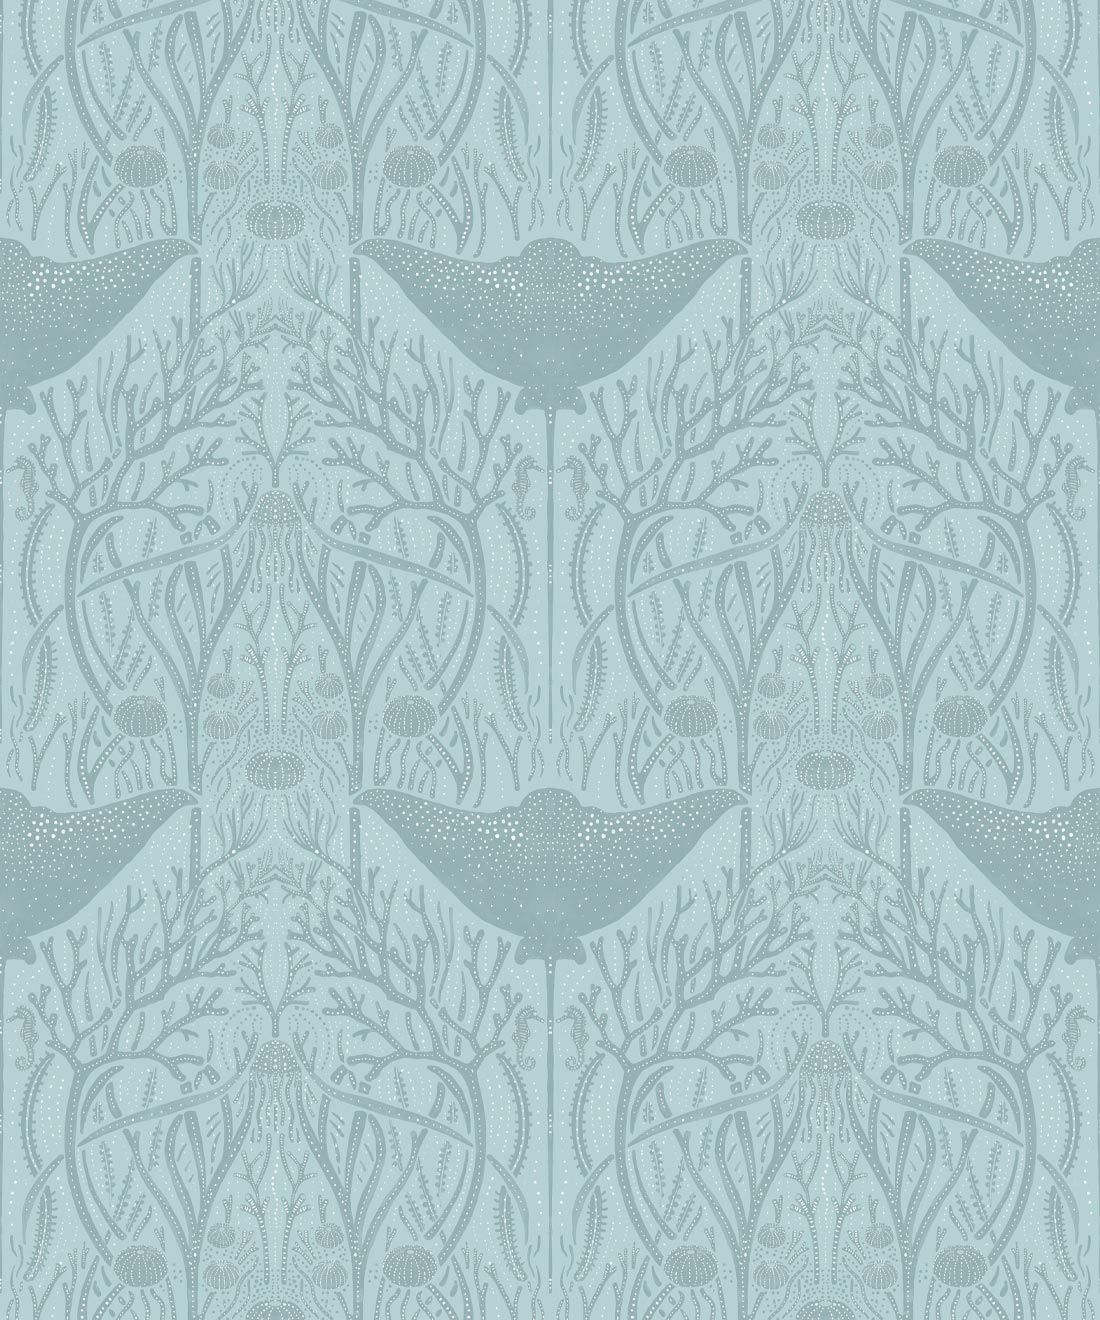 Manta Ray Wallpaper • Floral Wallpaper • Eggshell • Swatch